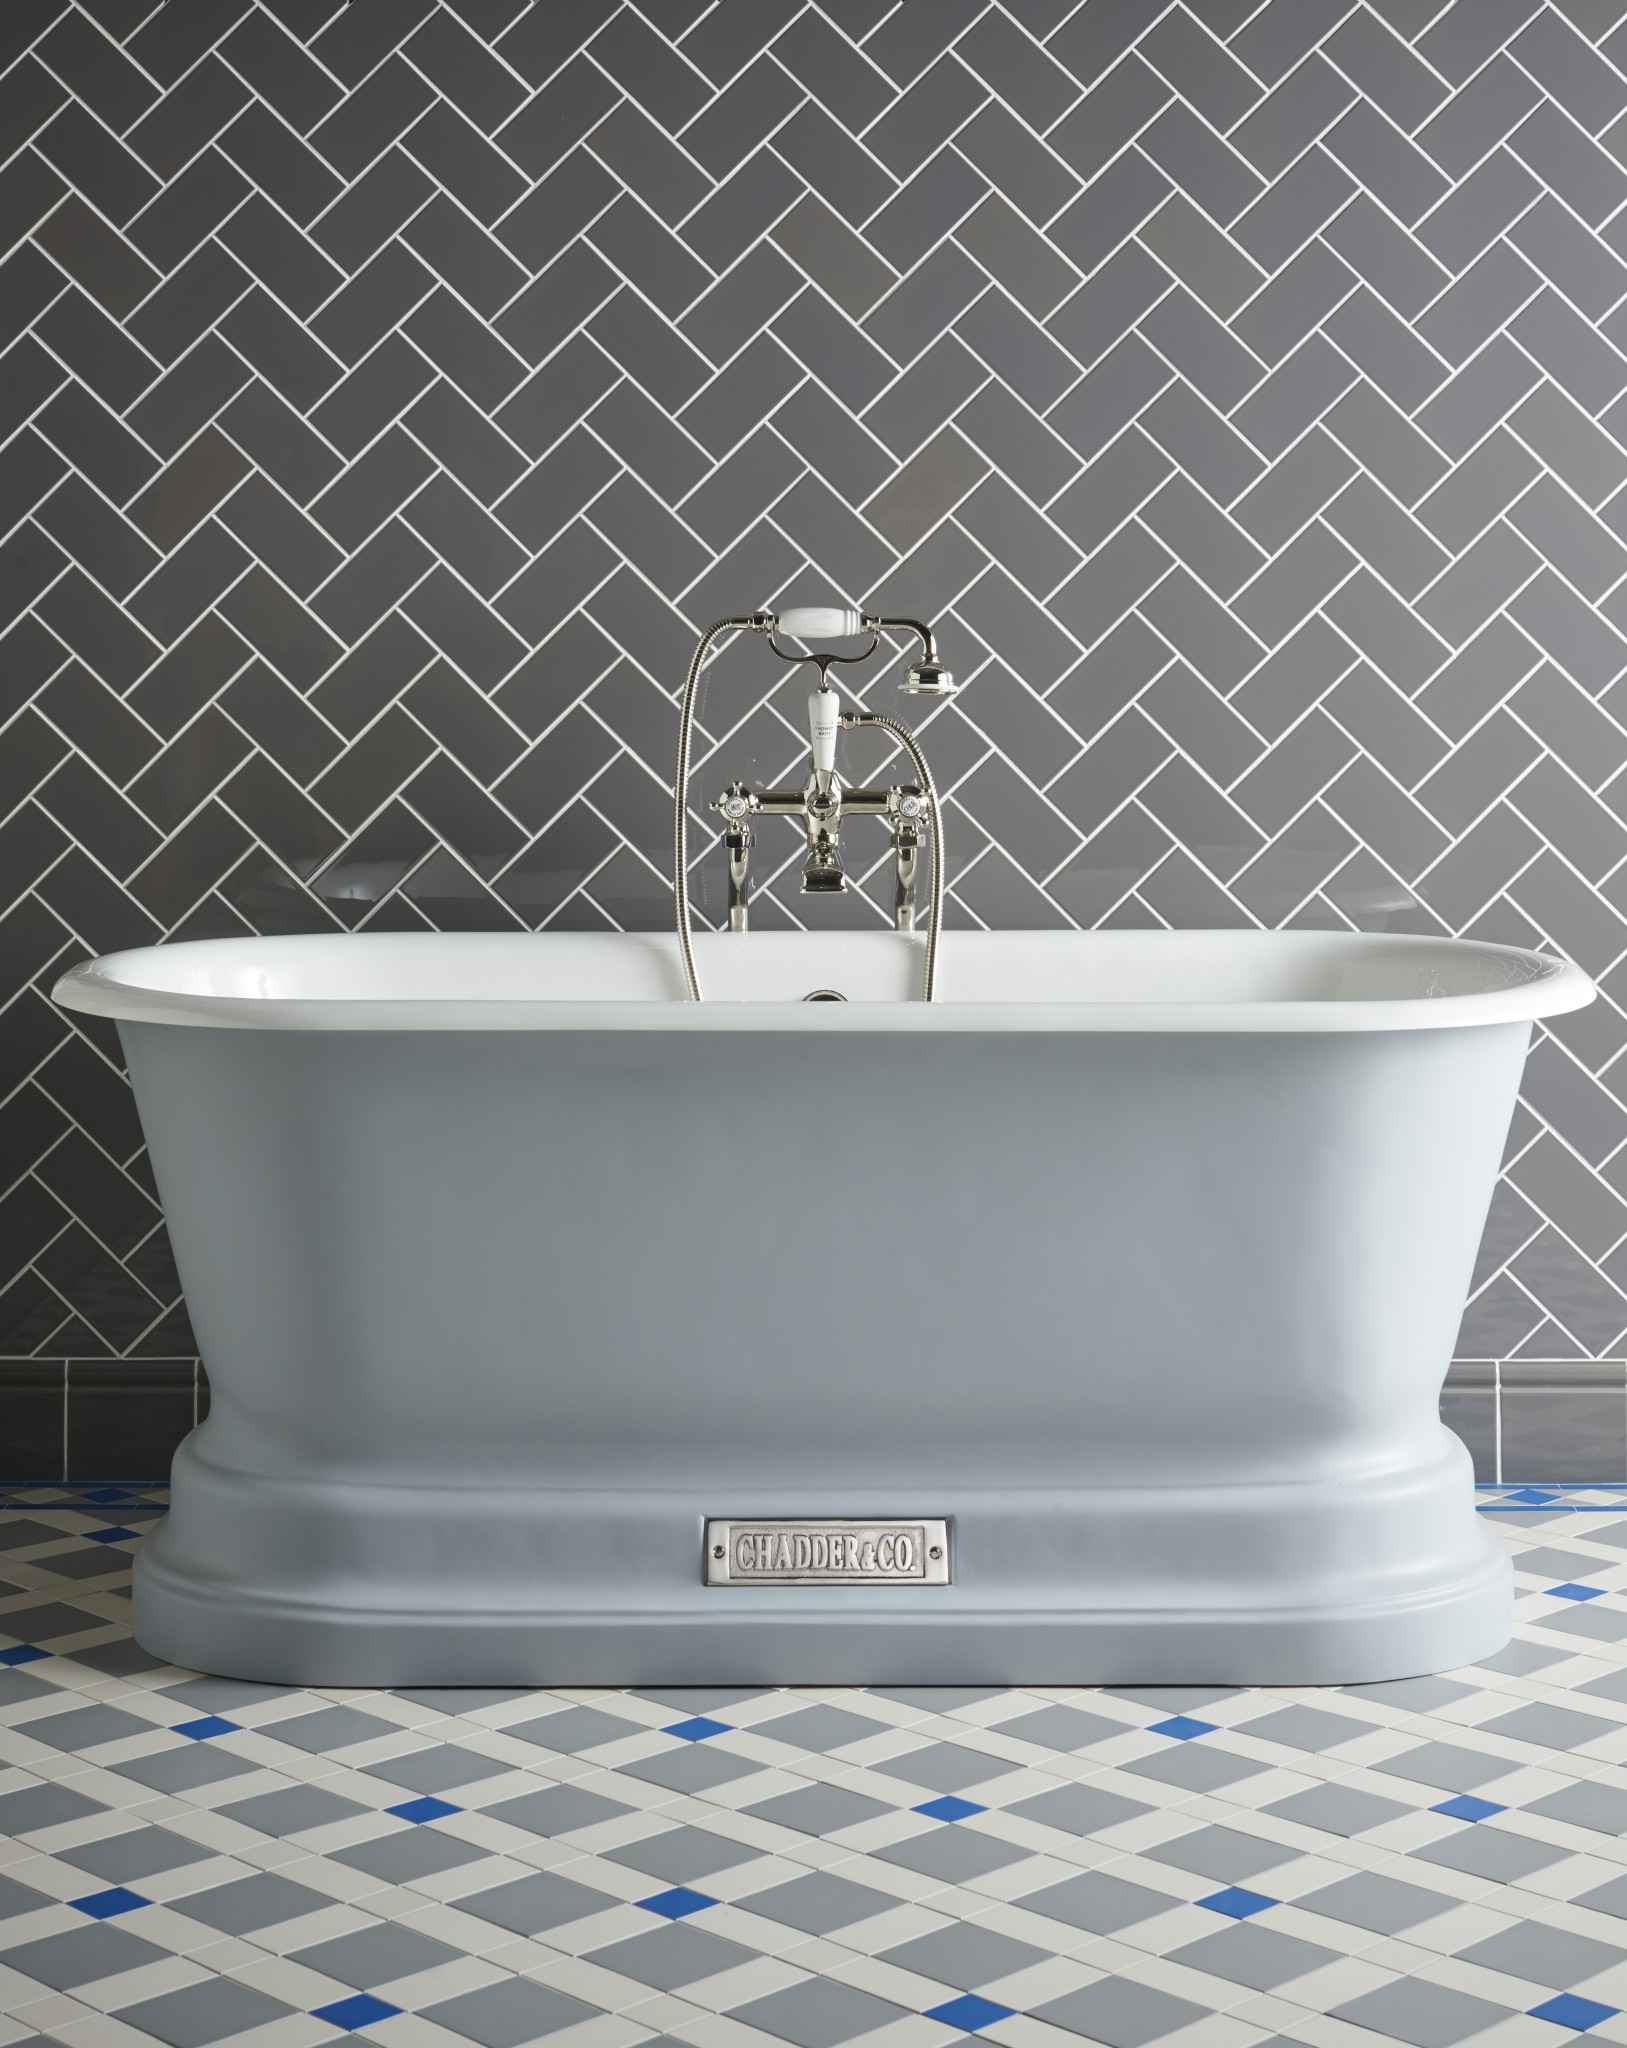 luxury-bathroom-chadder-bath-nickel-tap-blue-bath-tub-floor-tile-wall-tile-brassware-london-tiles-chadder-and-co-